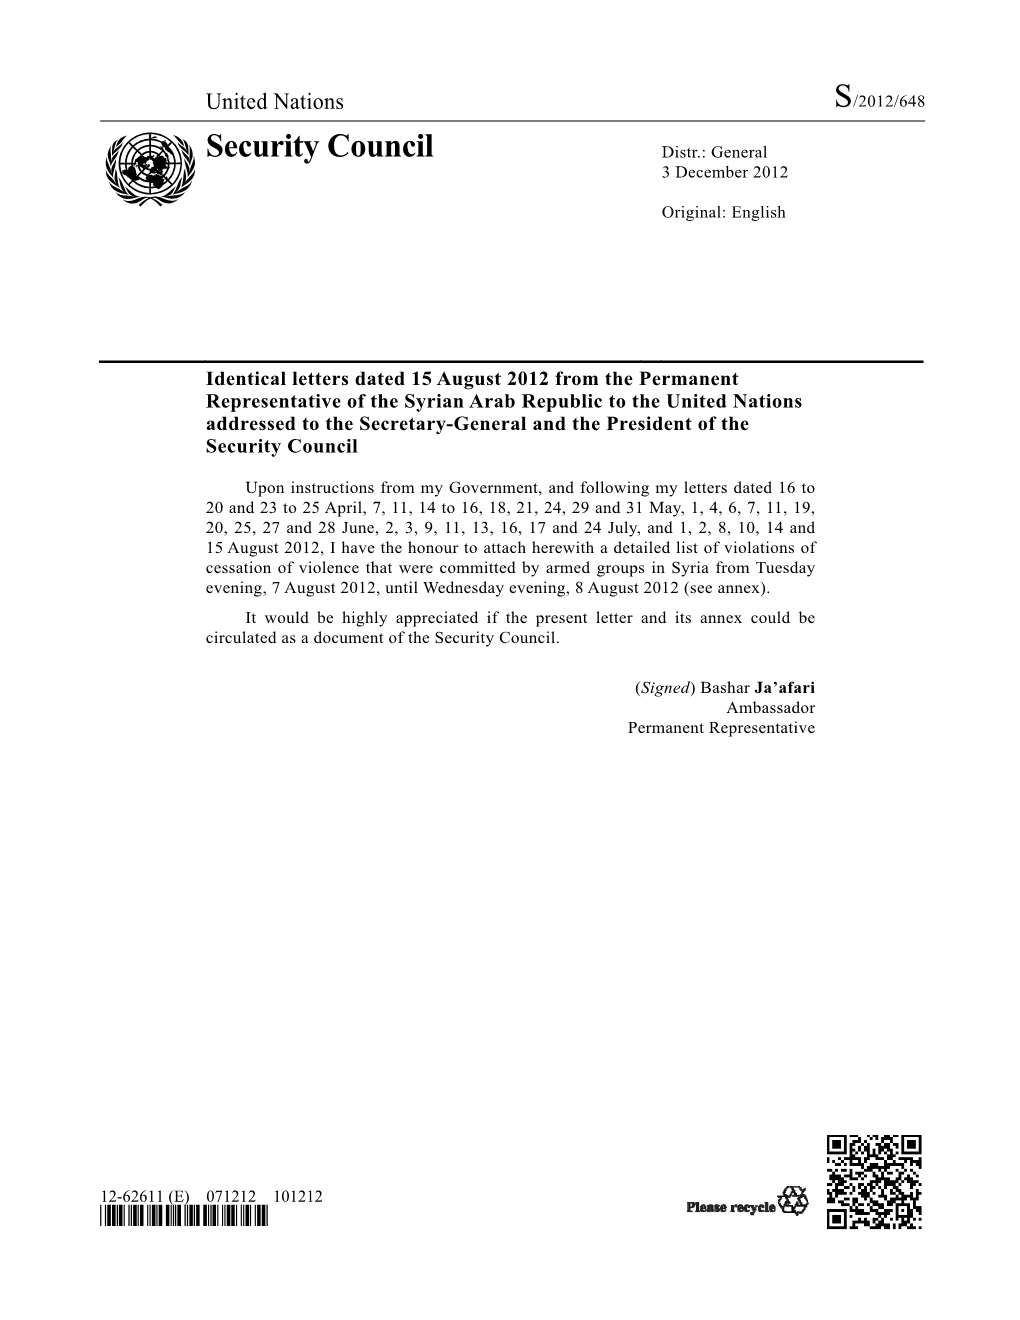 Security Council Distr.: General 3 December 2012